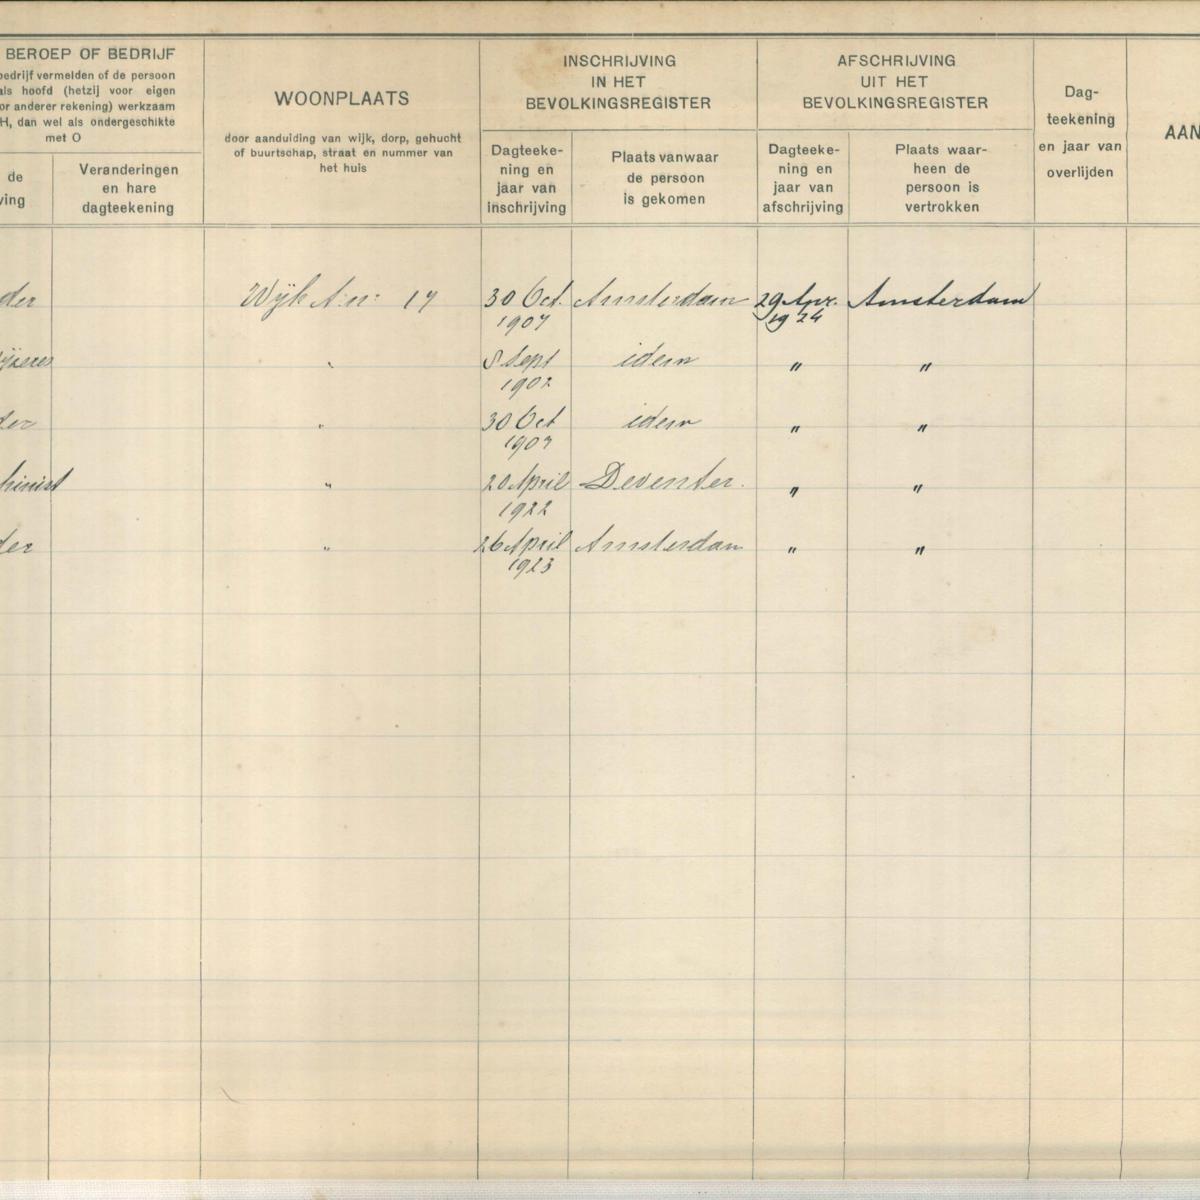 Civil registry, Ilpendam, 1850-1939, 43a-43b, sheet 565 (right)